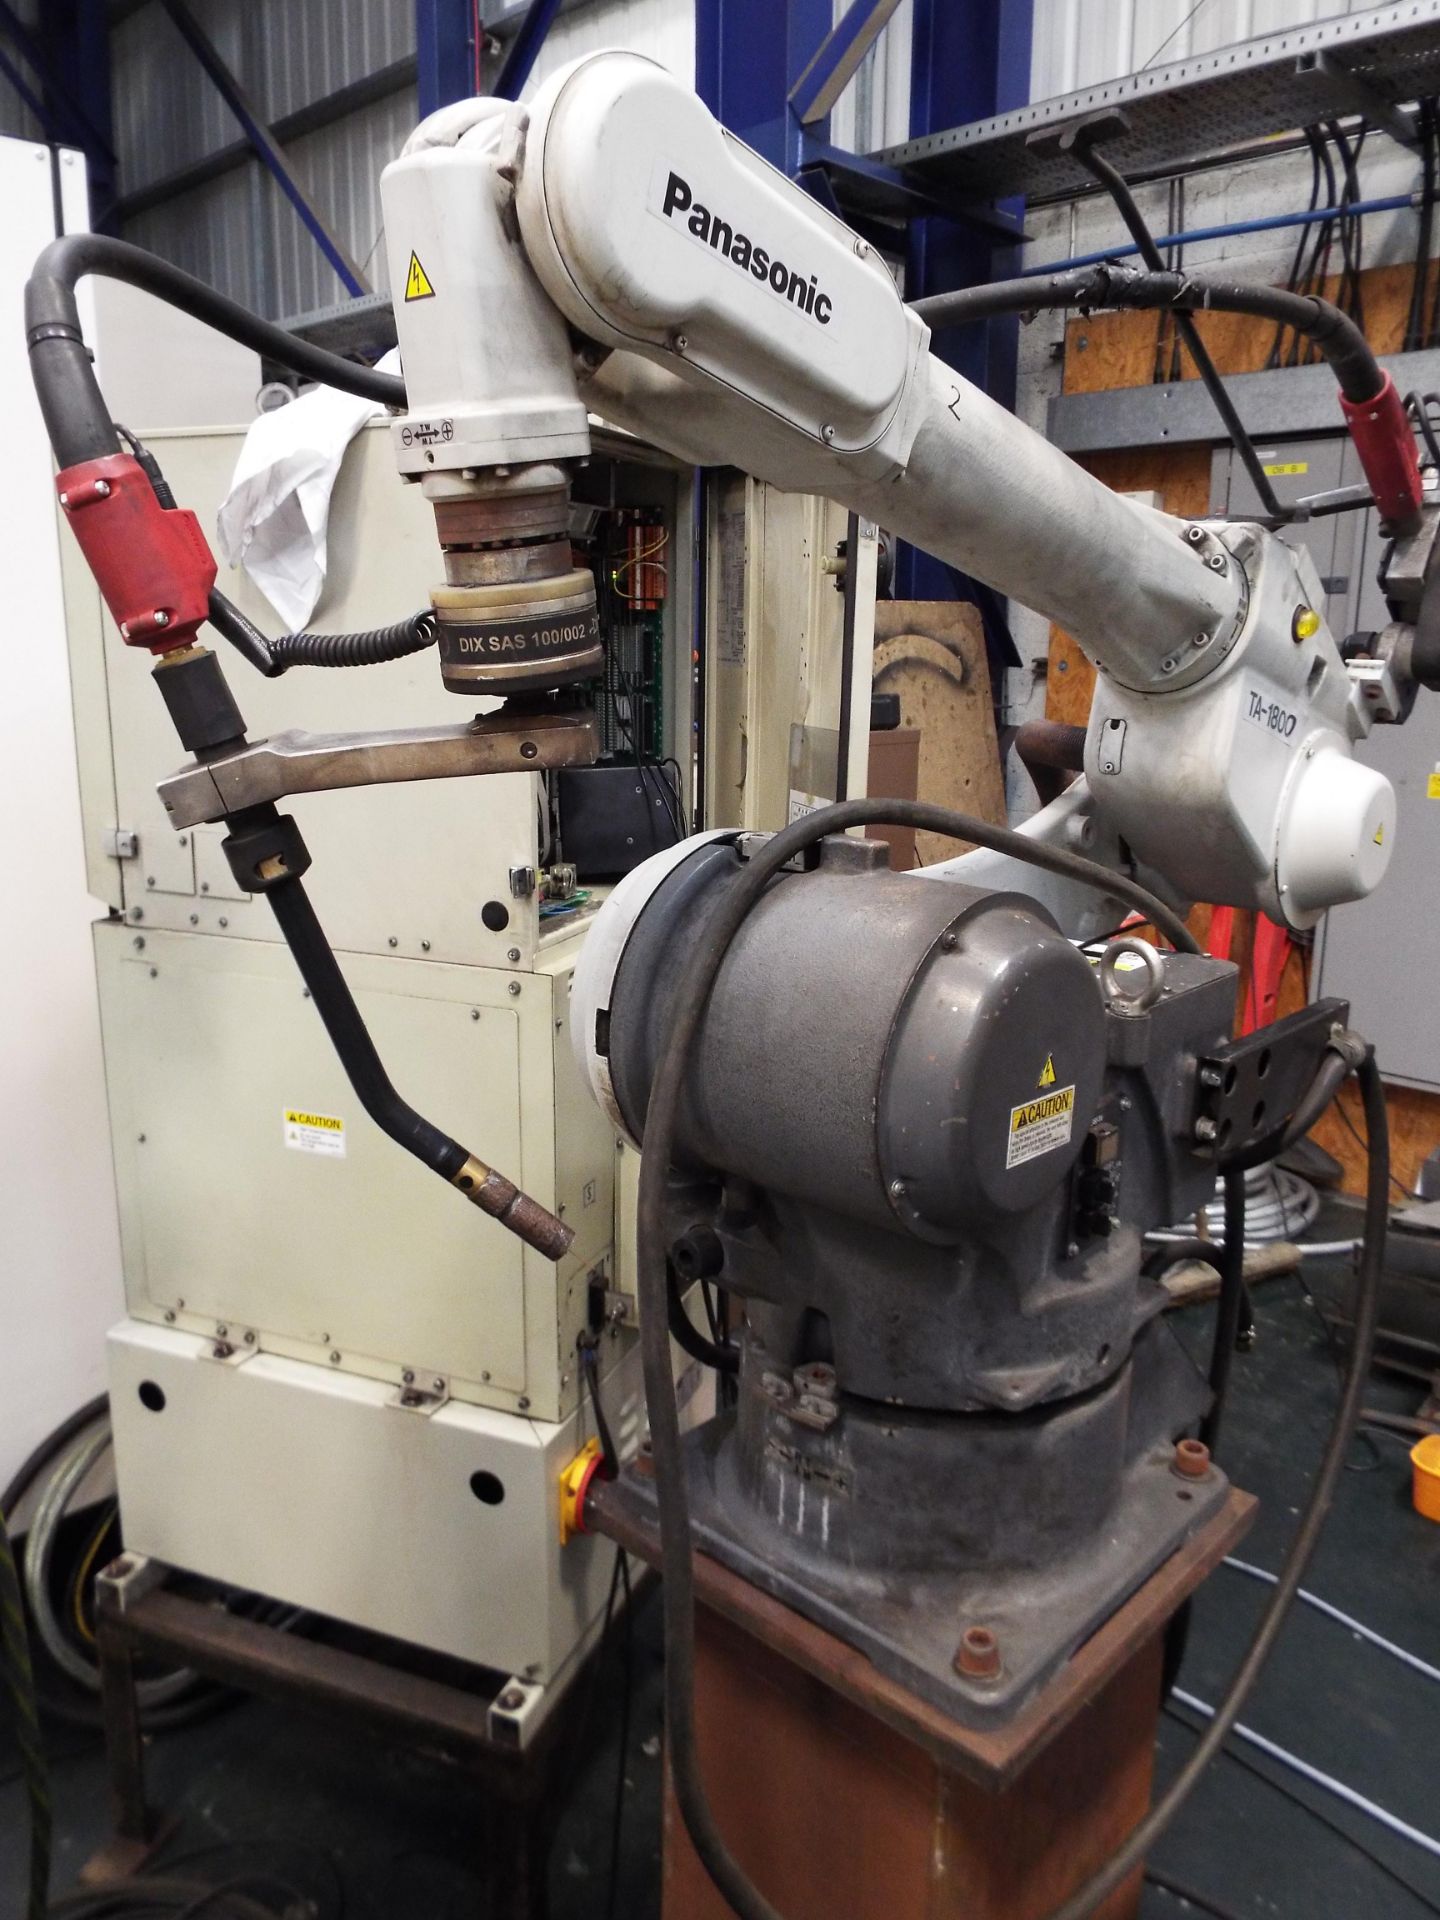 Panasonic TA1800 MIG Welding Robot - Image 7 of 9